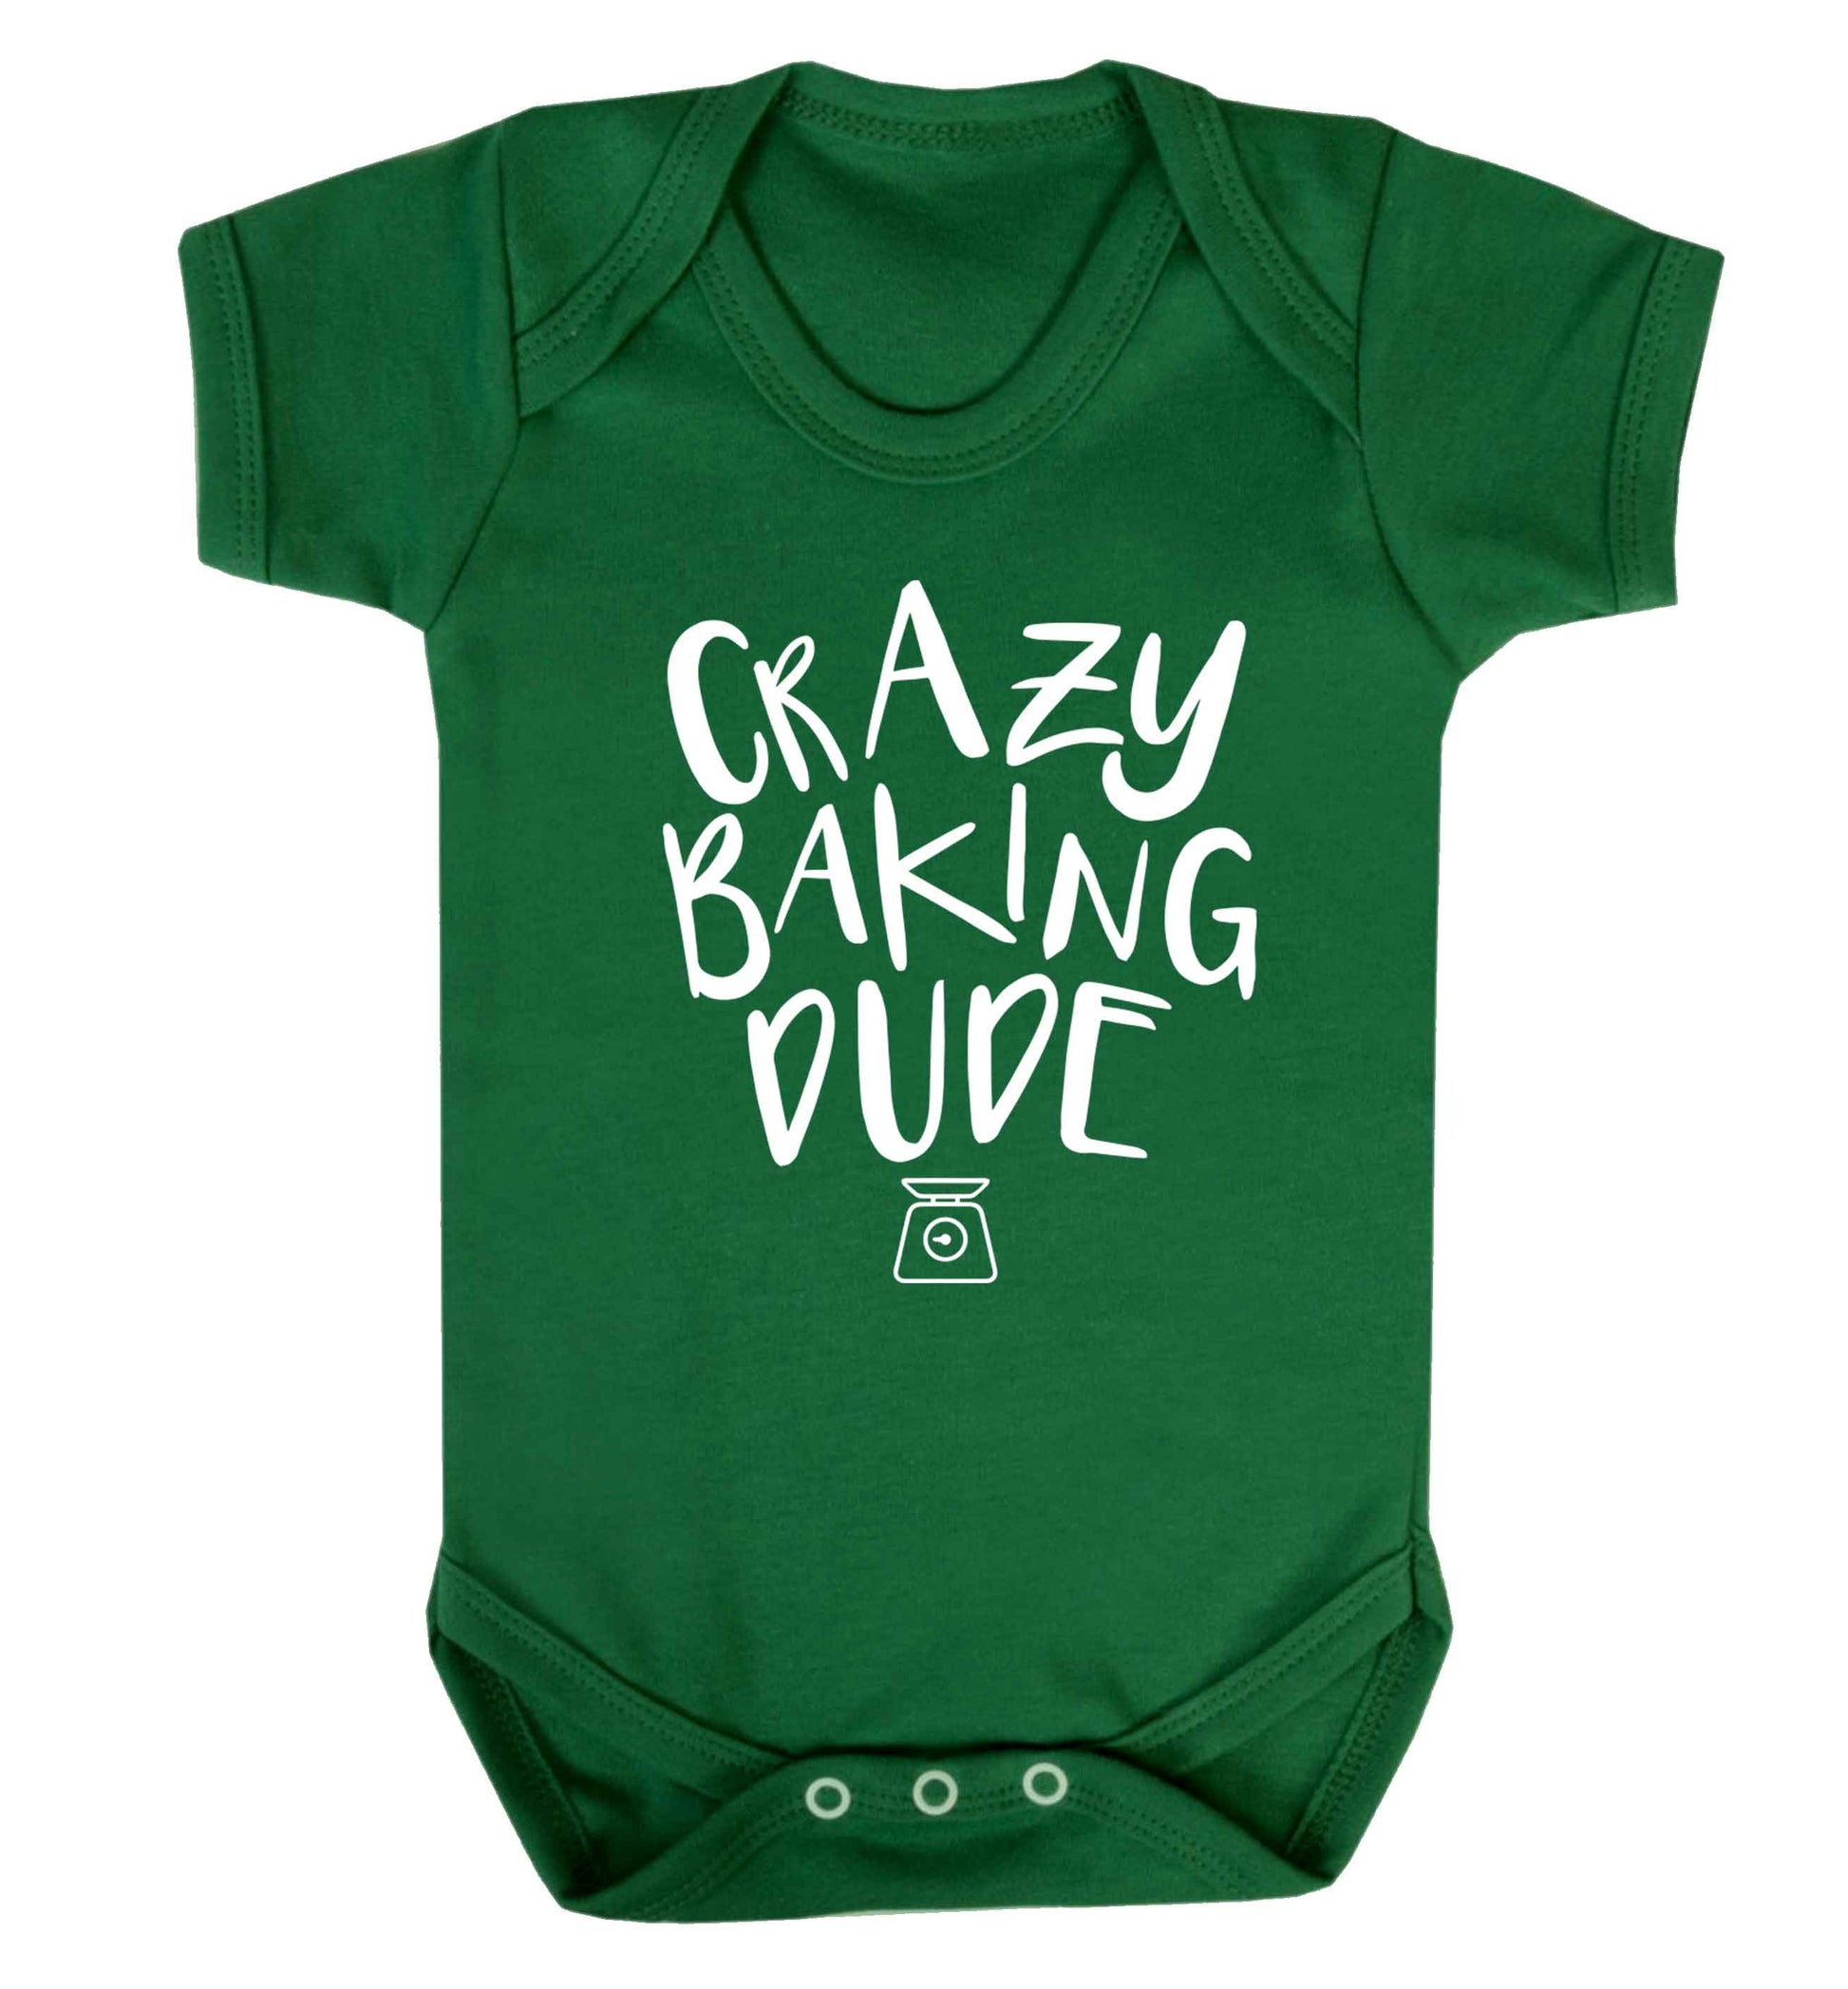 Crazy baking dude Baby Vest green 18-24 months